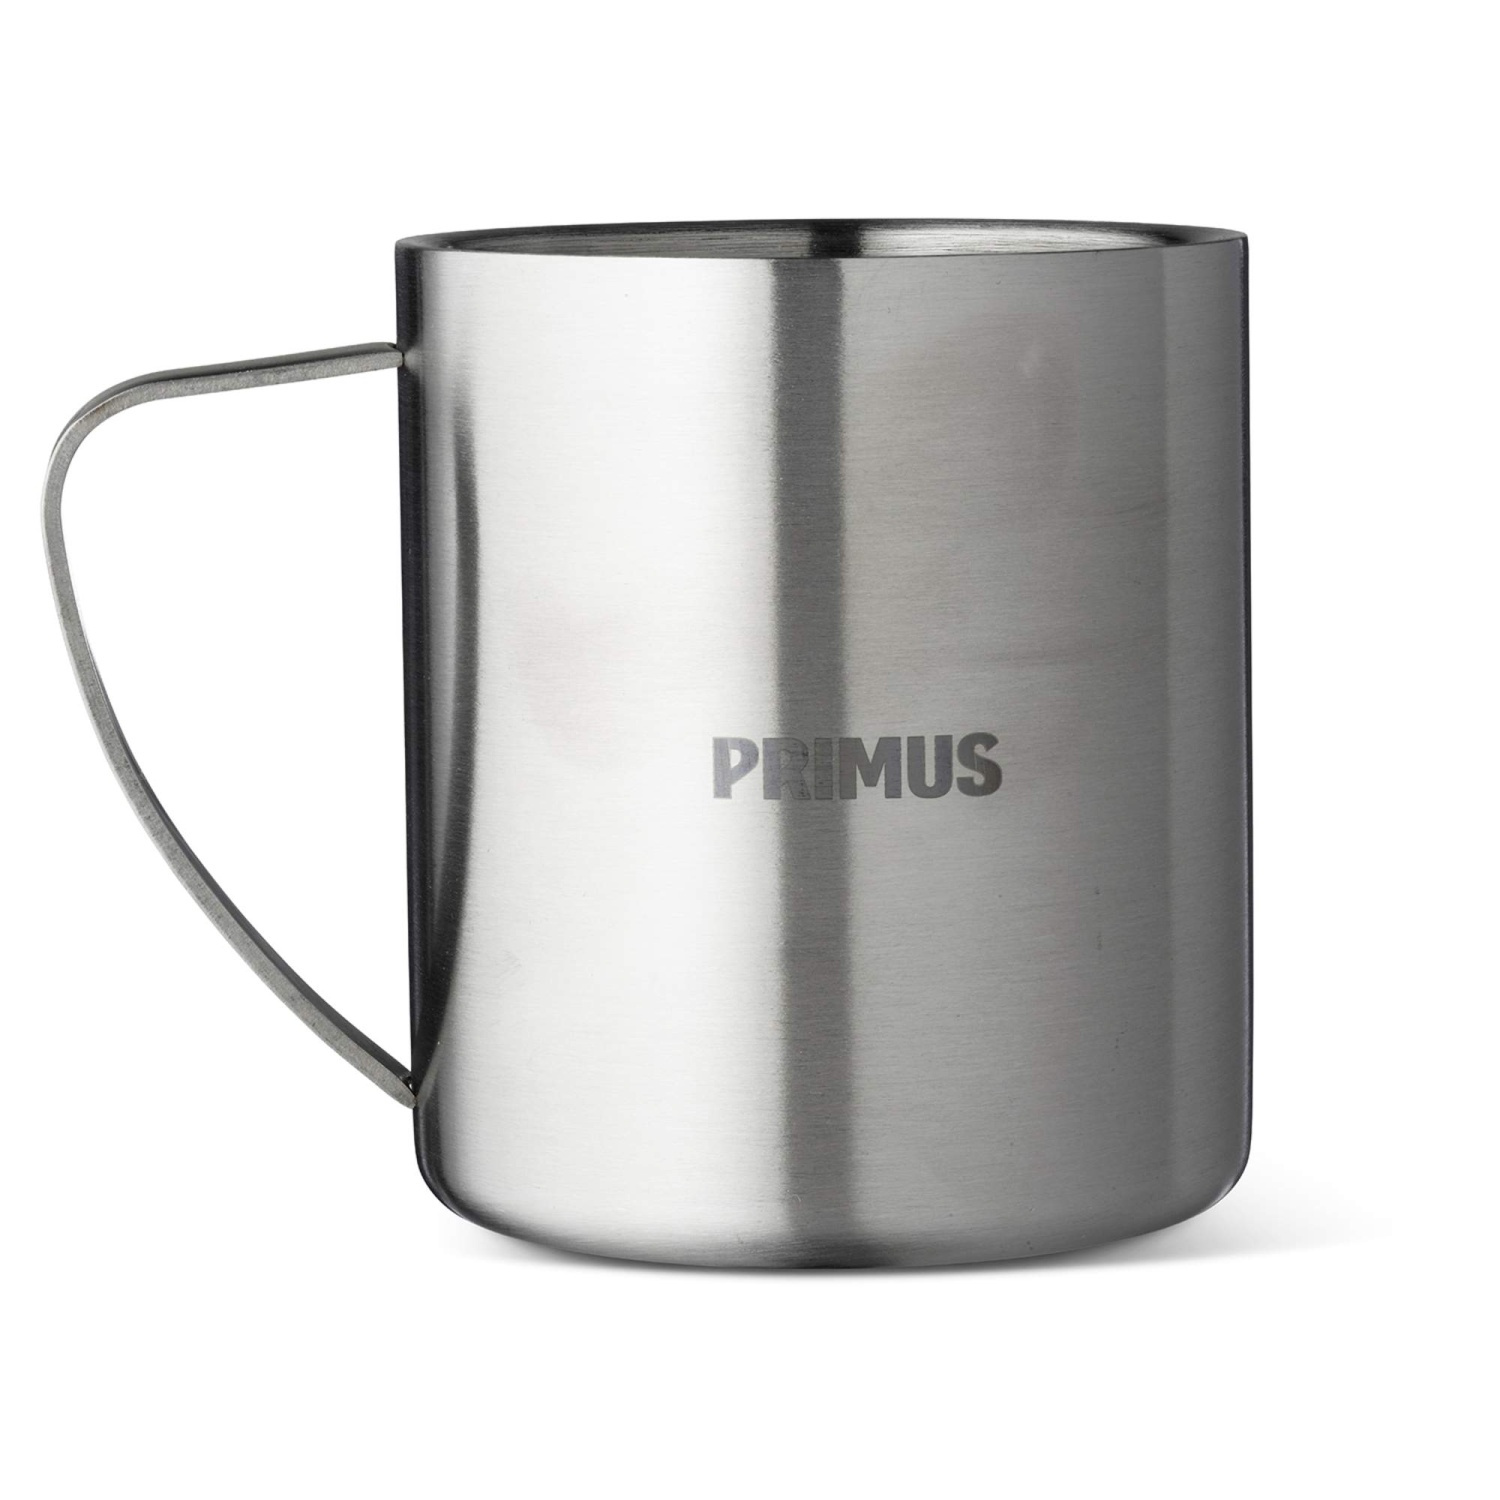 Primus 4-Season Mug 0.2 L